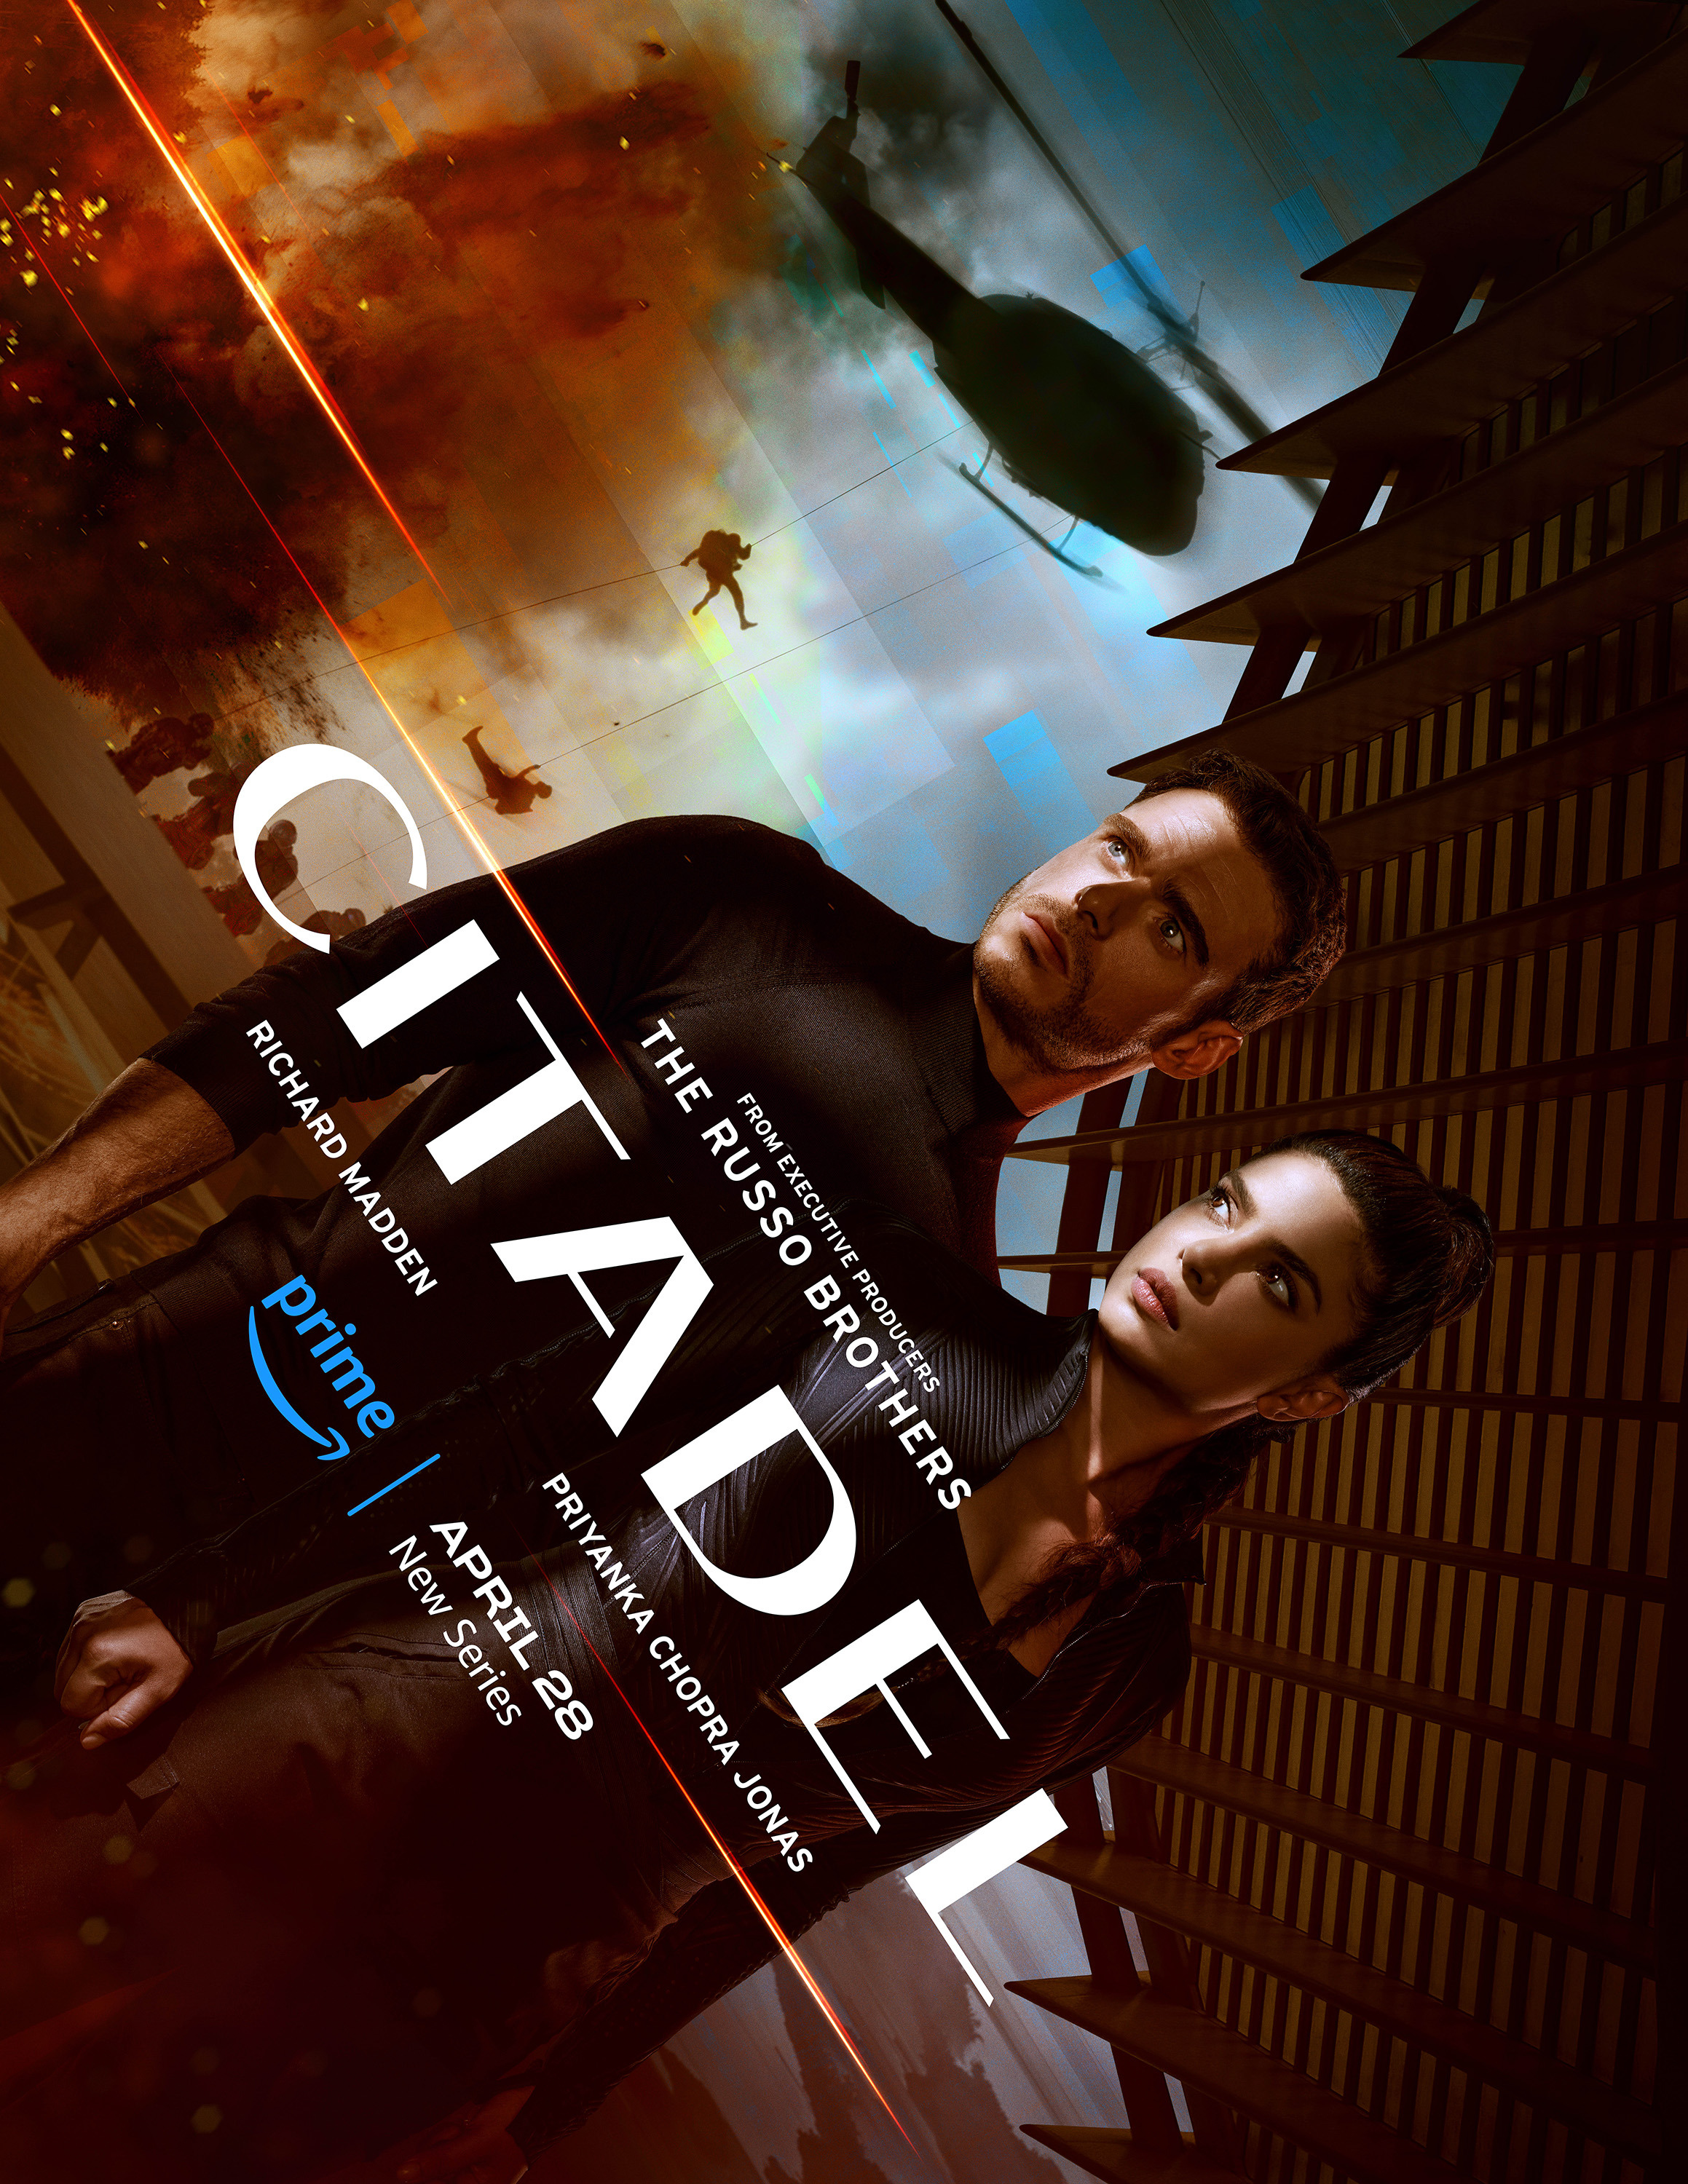 Mega Sized TV Poster Image for Citadel (#11 of 11)